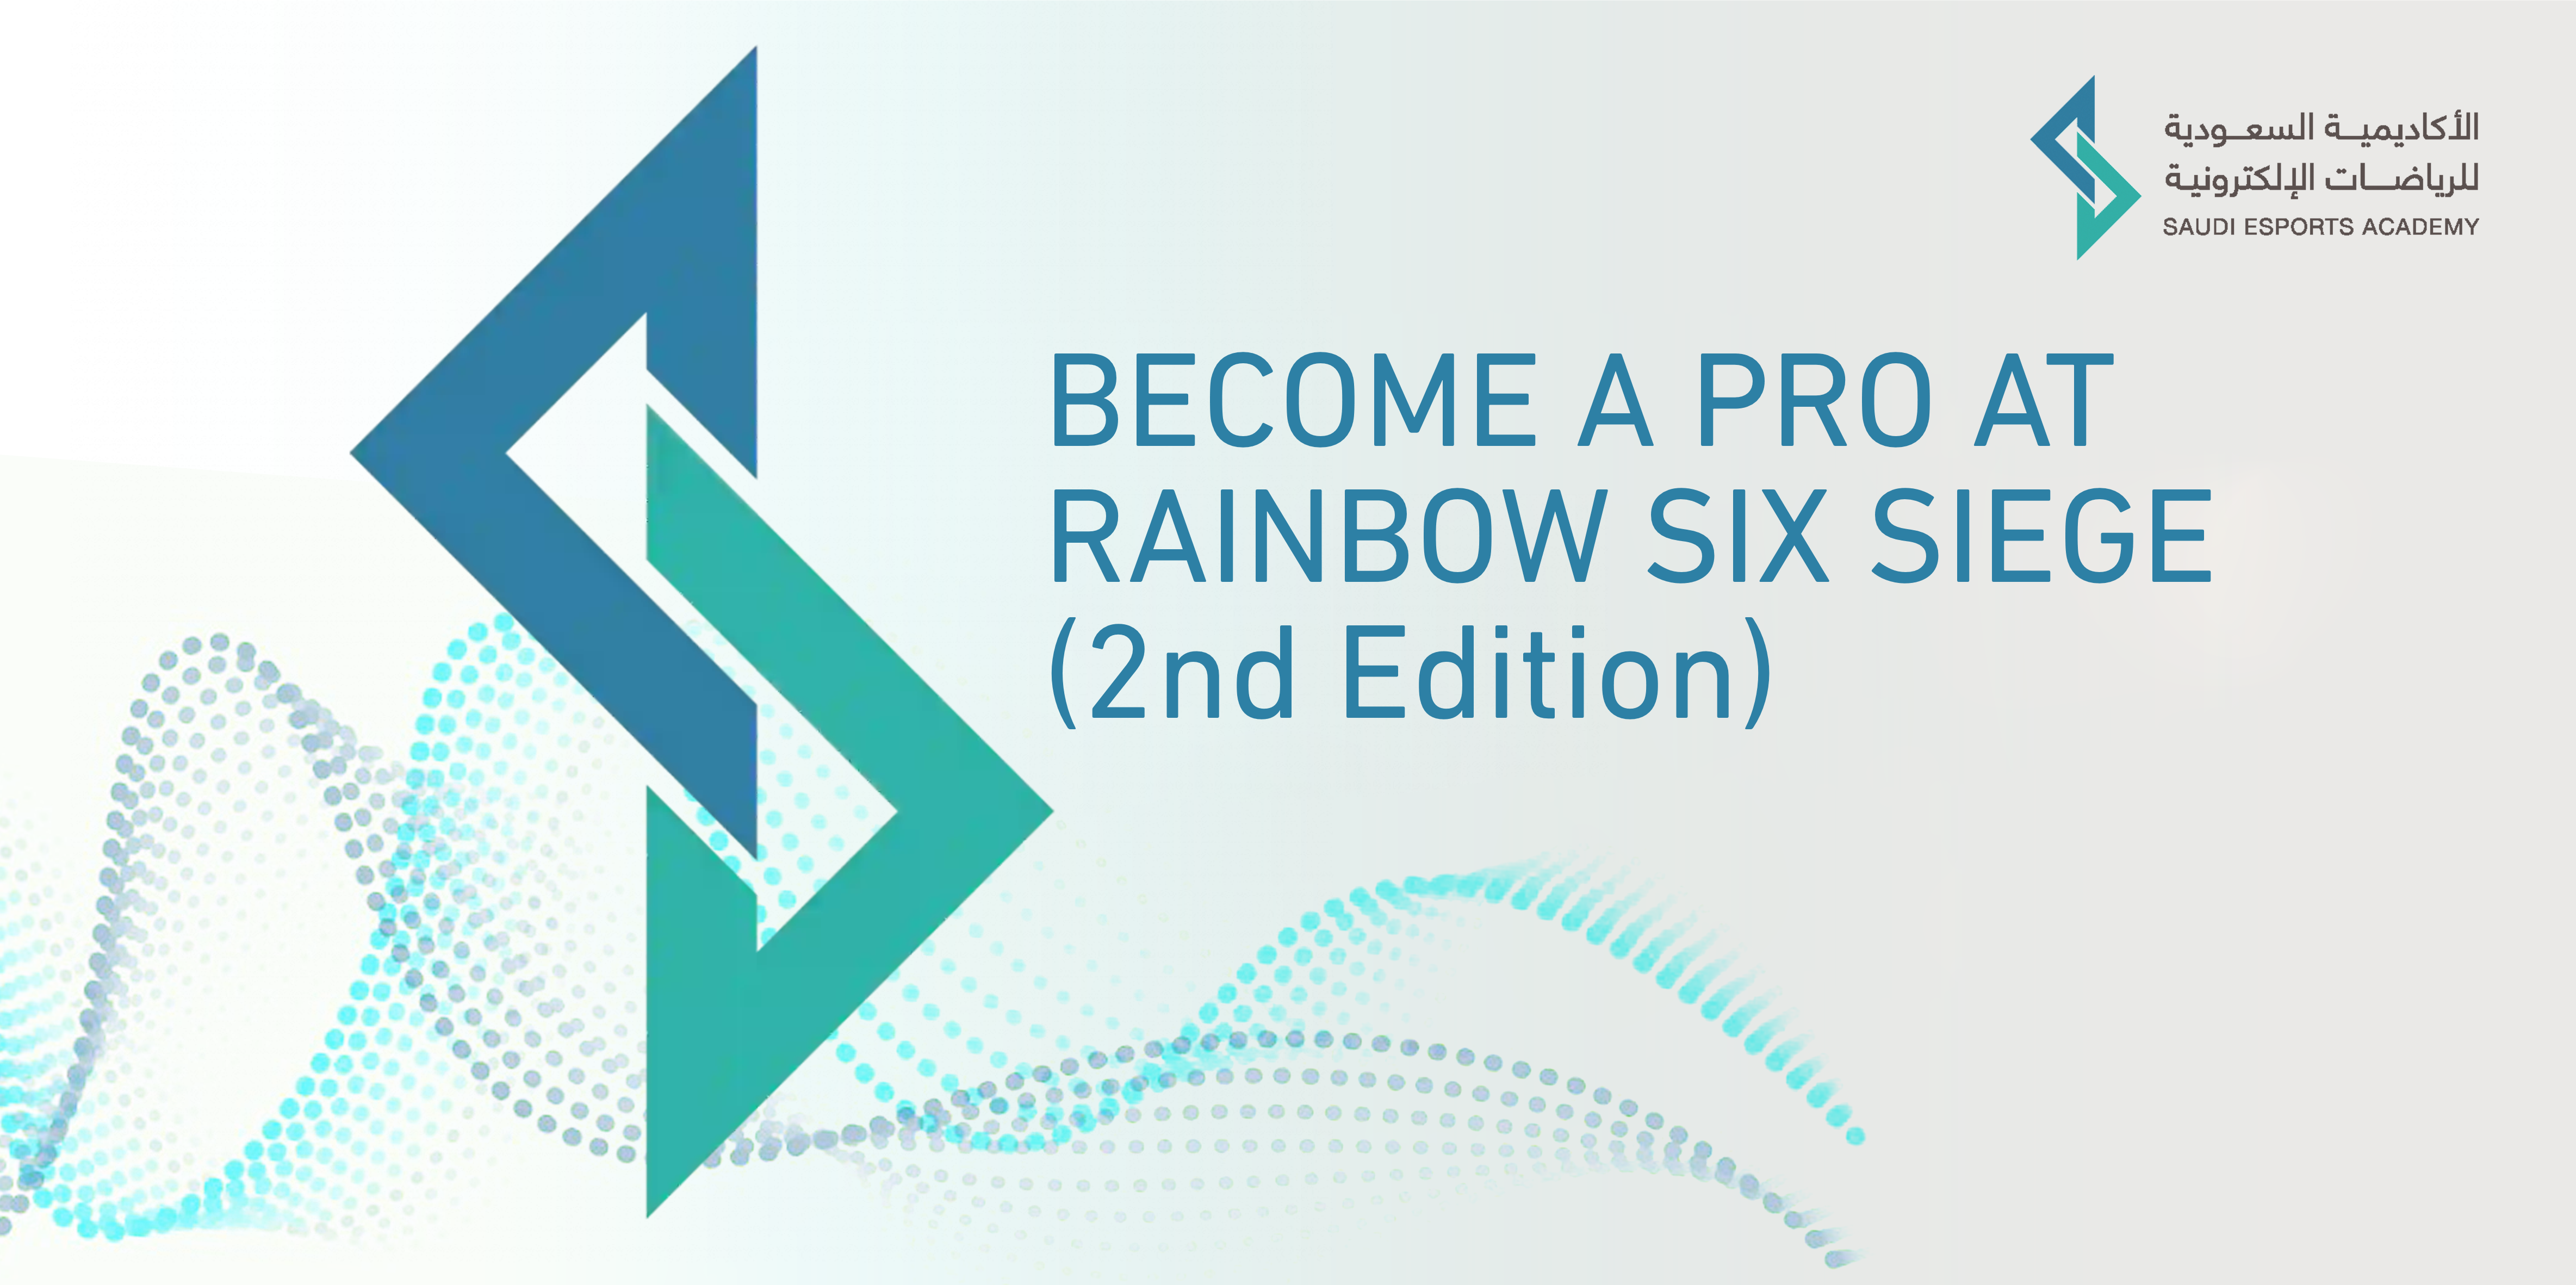 BECOME A PRO AT RAINBOW SIX SIEGE (2nd Edition) BPROATR6-2ND